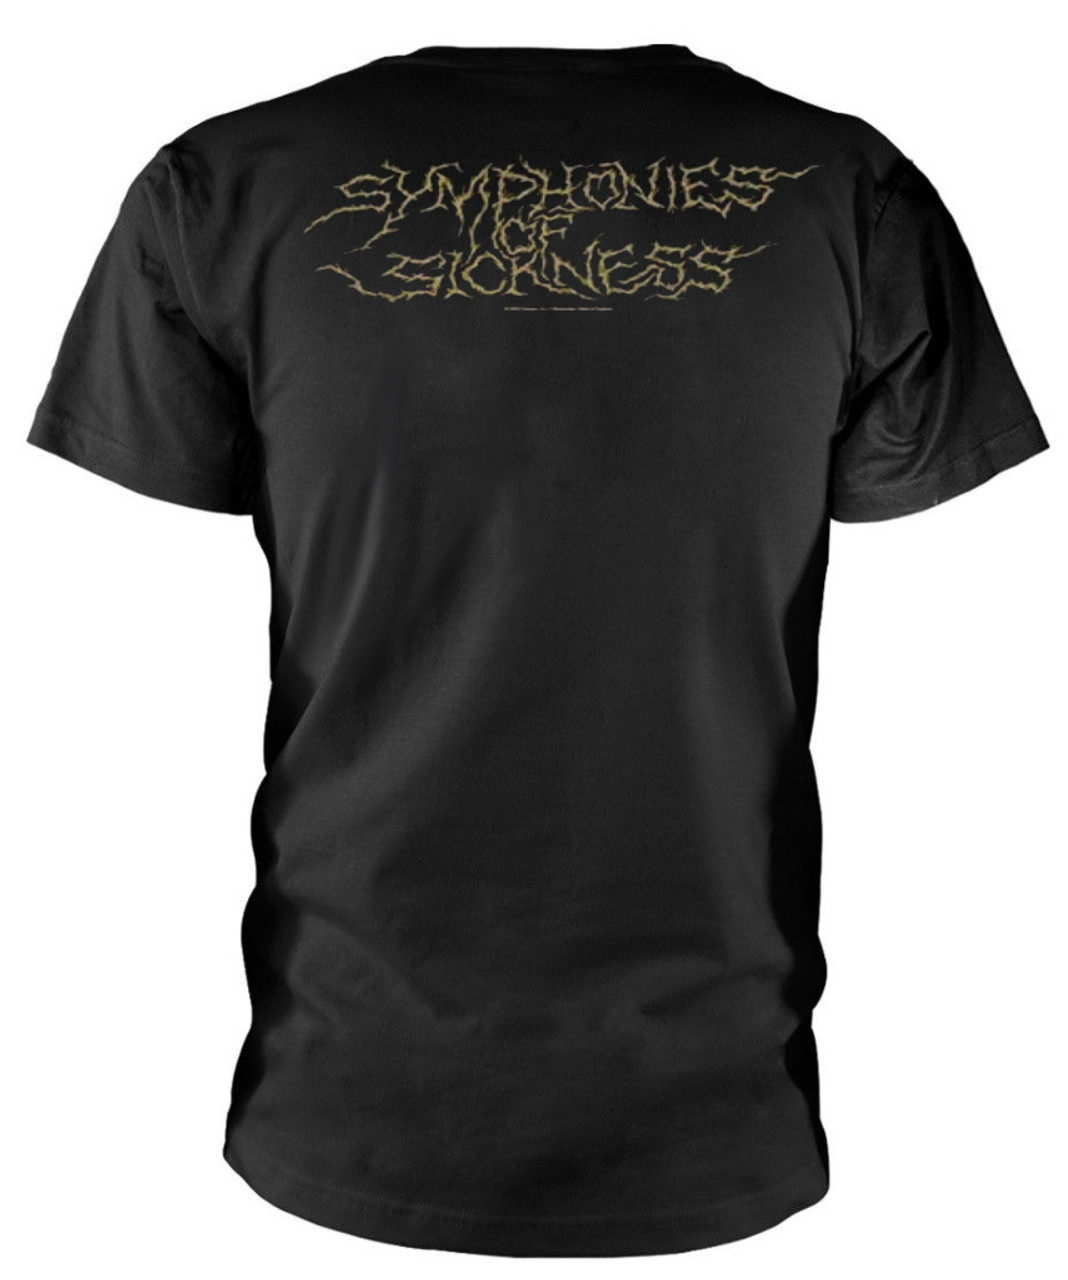 Carcass 'Symphonies Of Sickness' (Black) T-Shirt